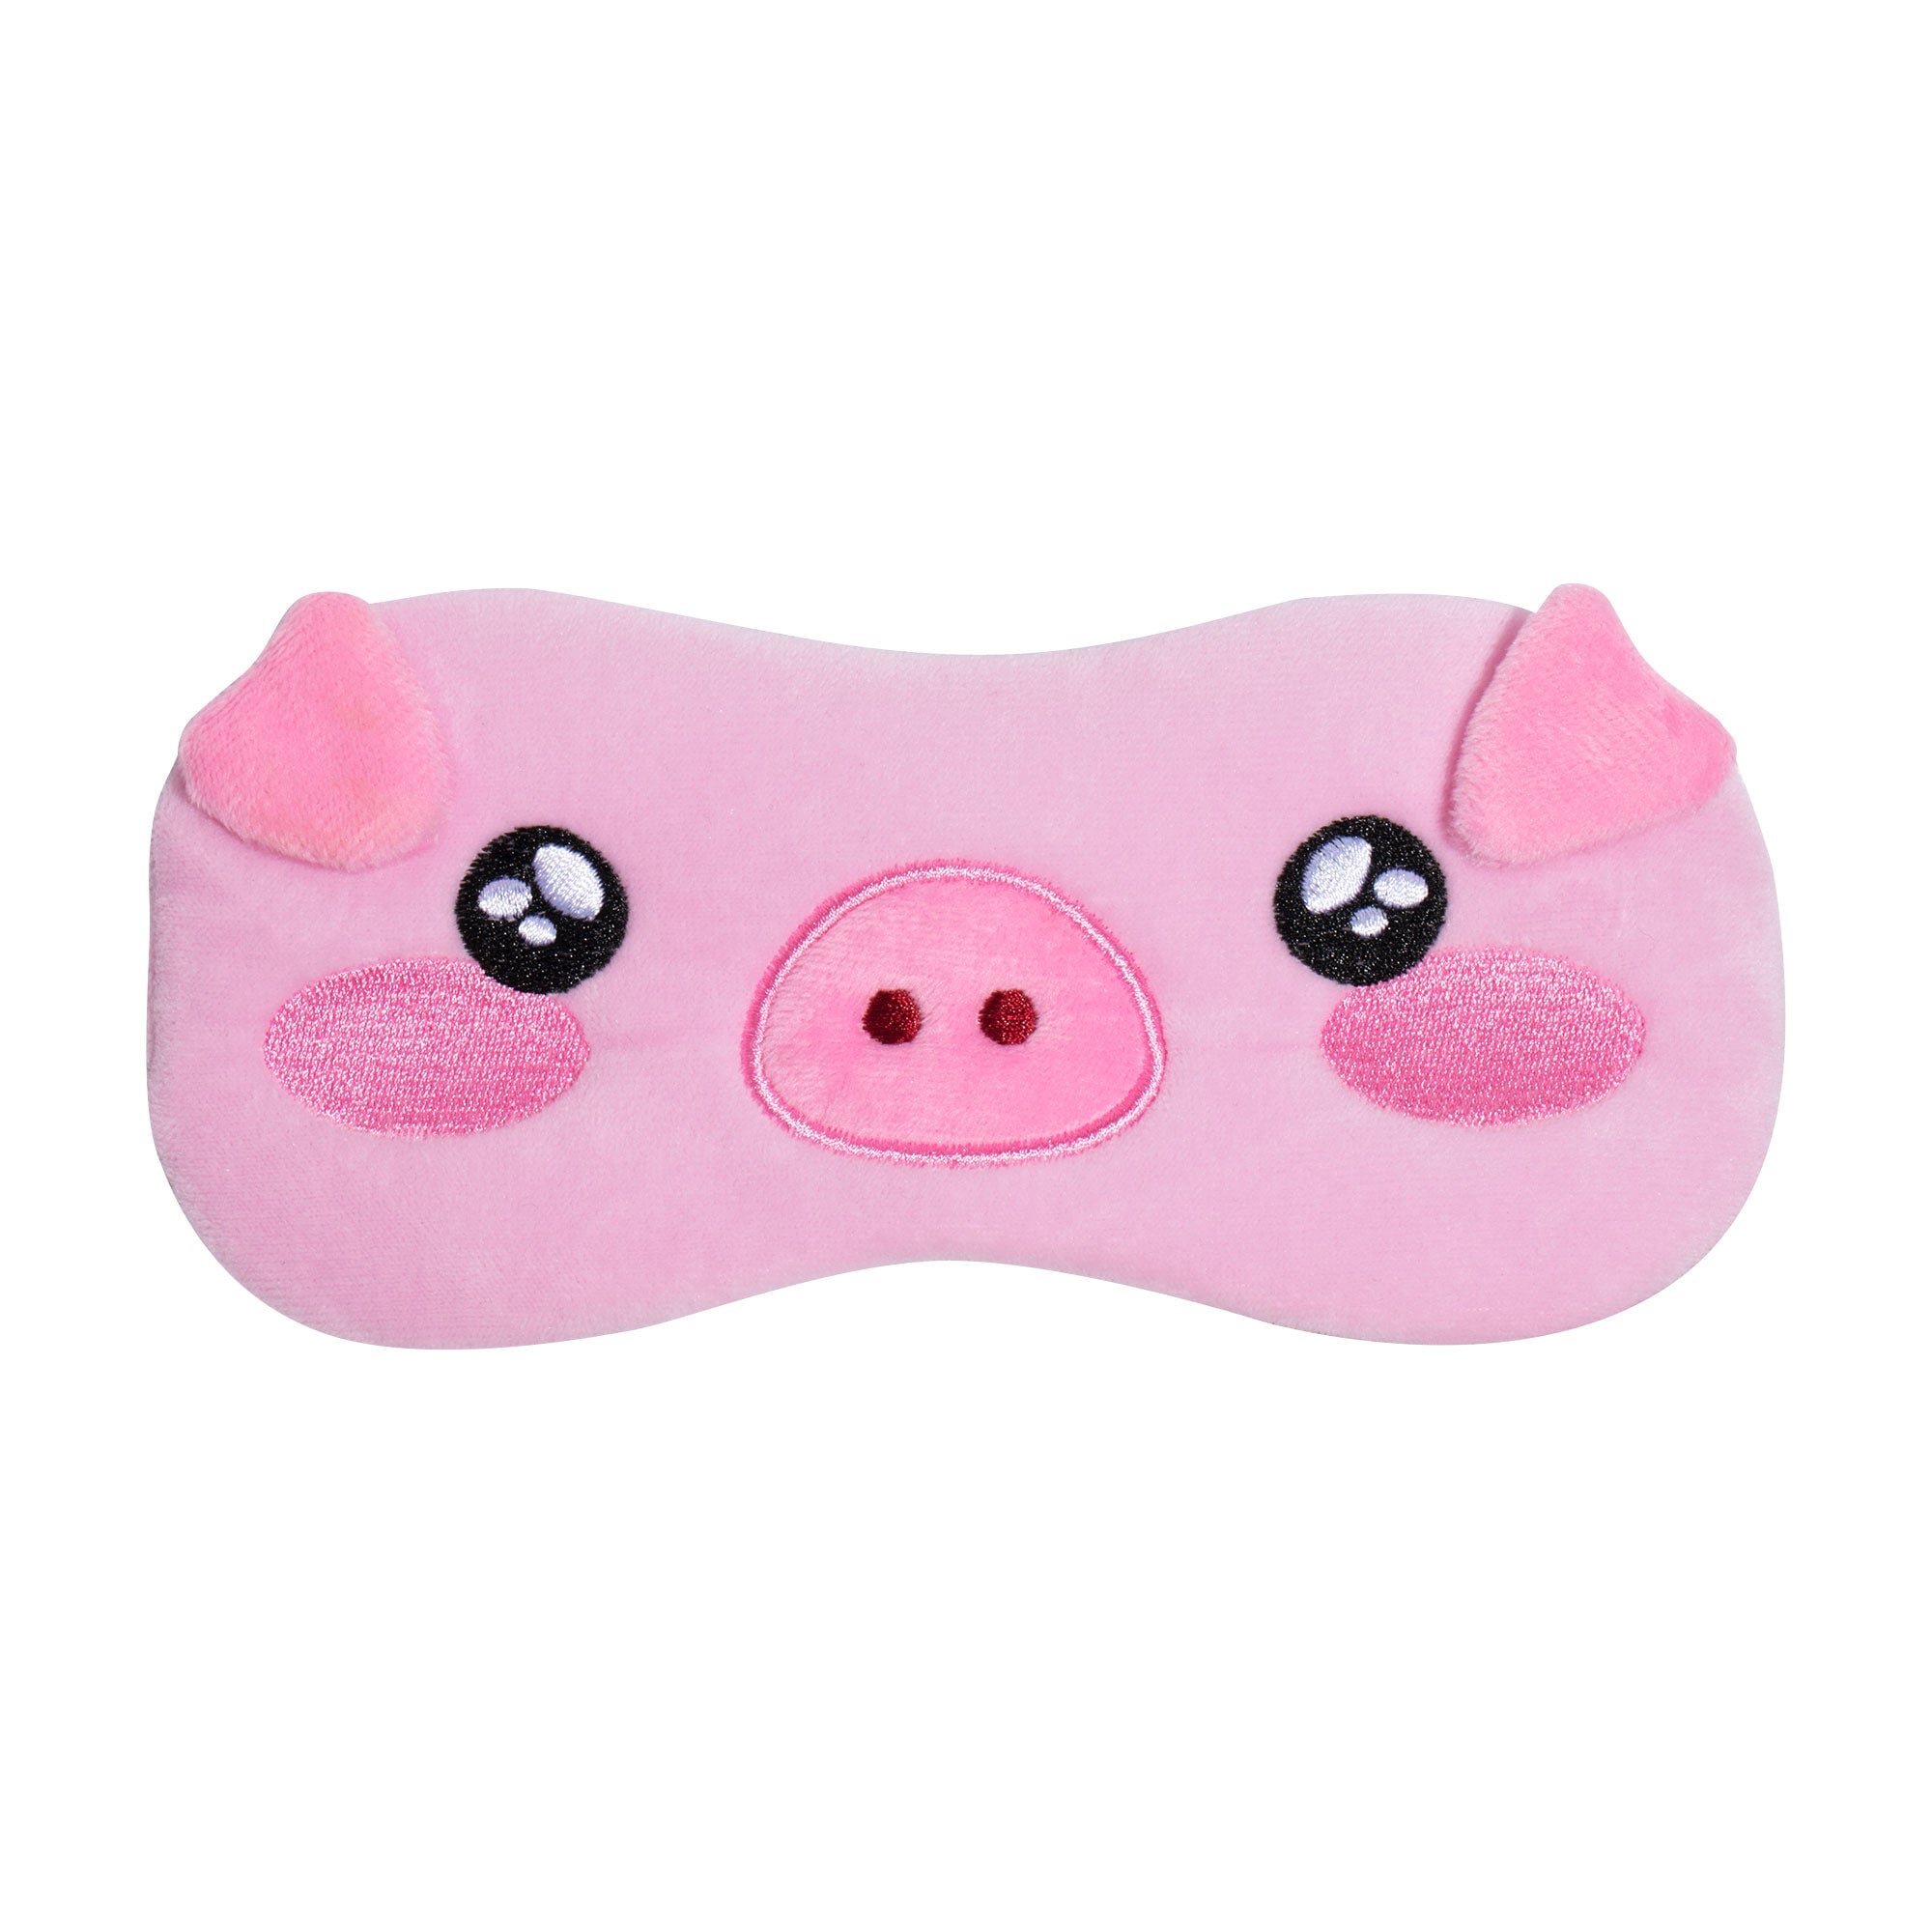 Peaceful Piggy Plush Sleep Mask Sleep Masks The Crème Shop 